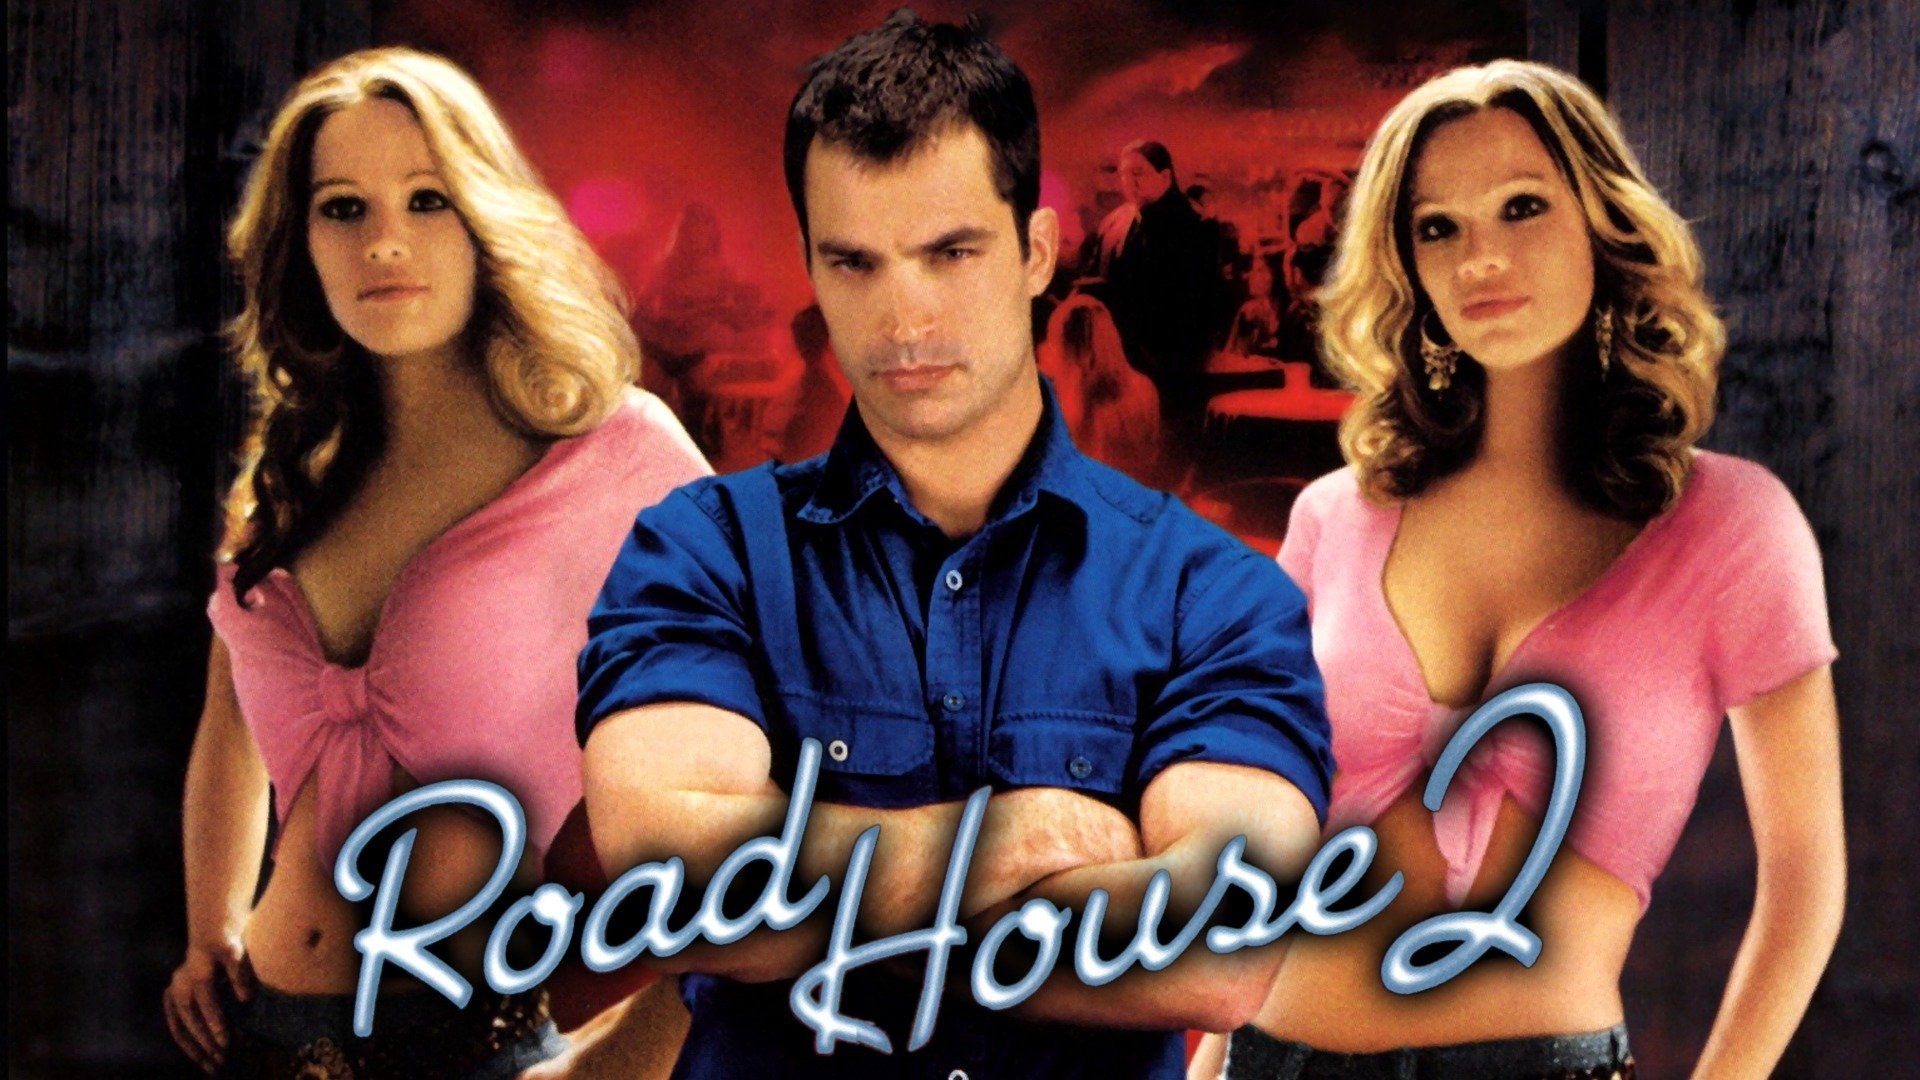 Watch Road House 2 Last Call (2006) Full Movie Online Plex